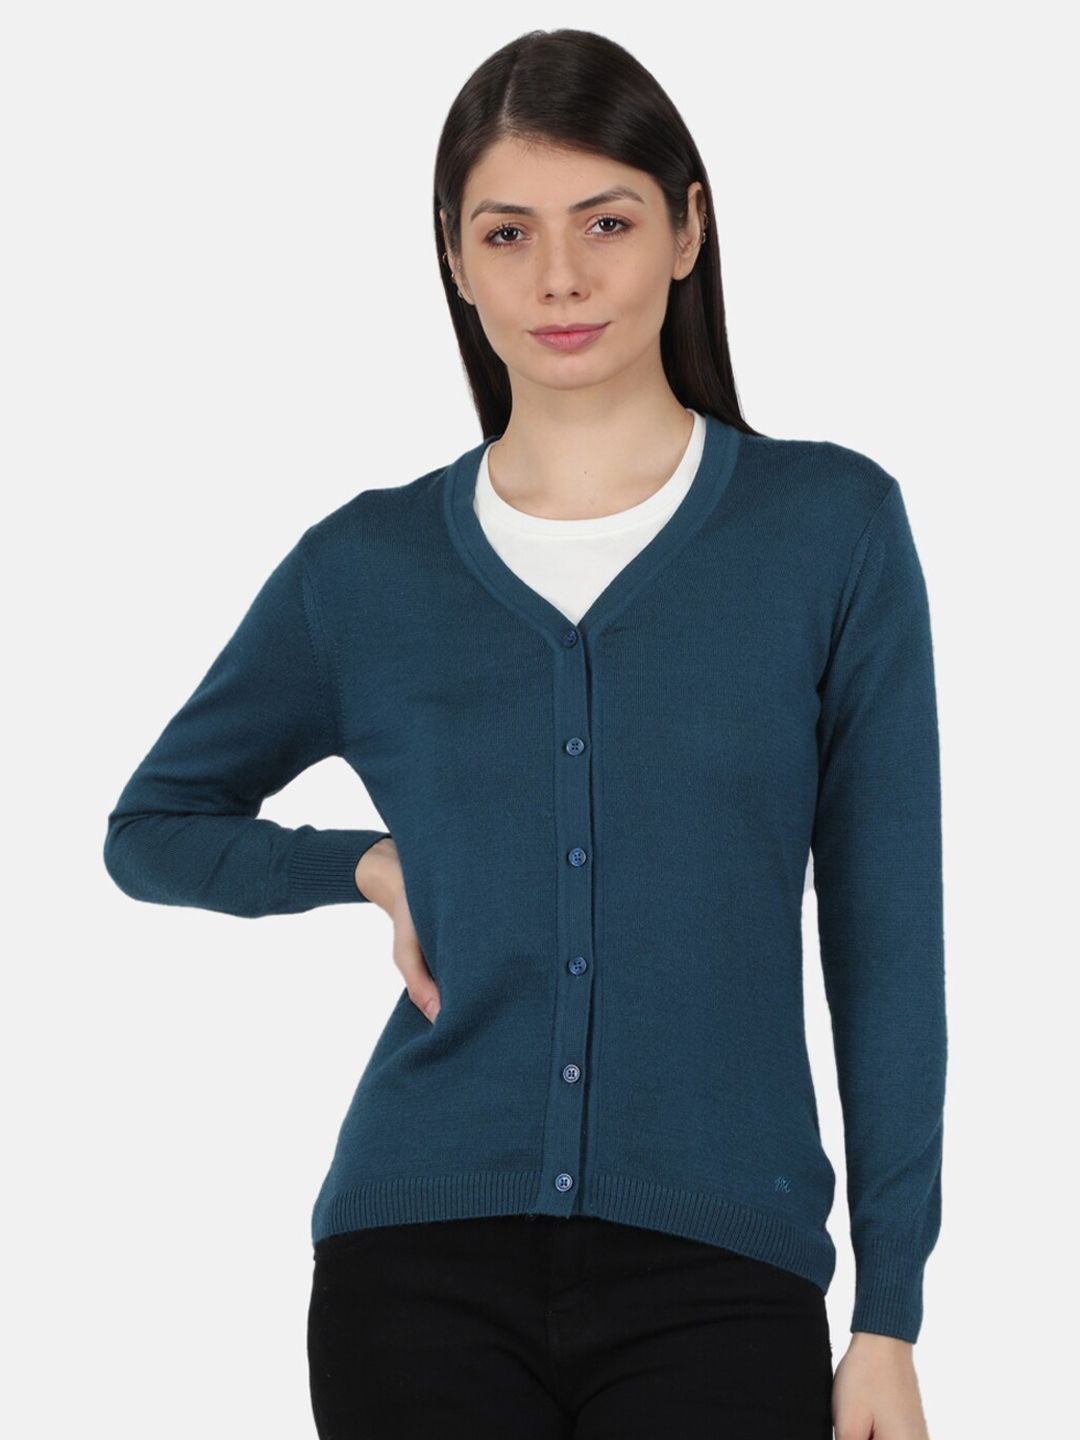 Monte Carlo Women Teal Cardigan sweater Price in India